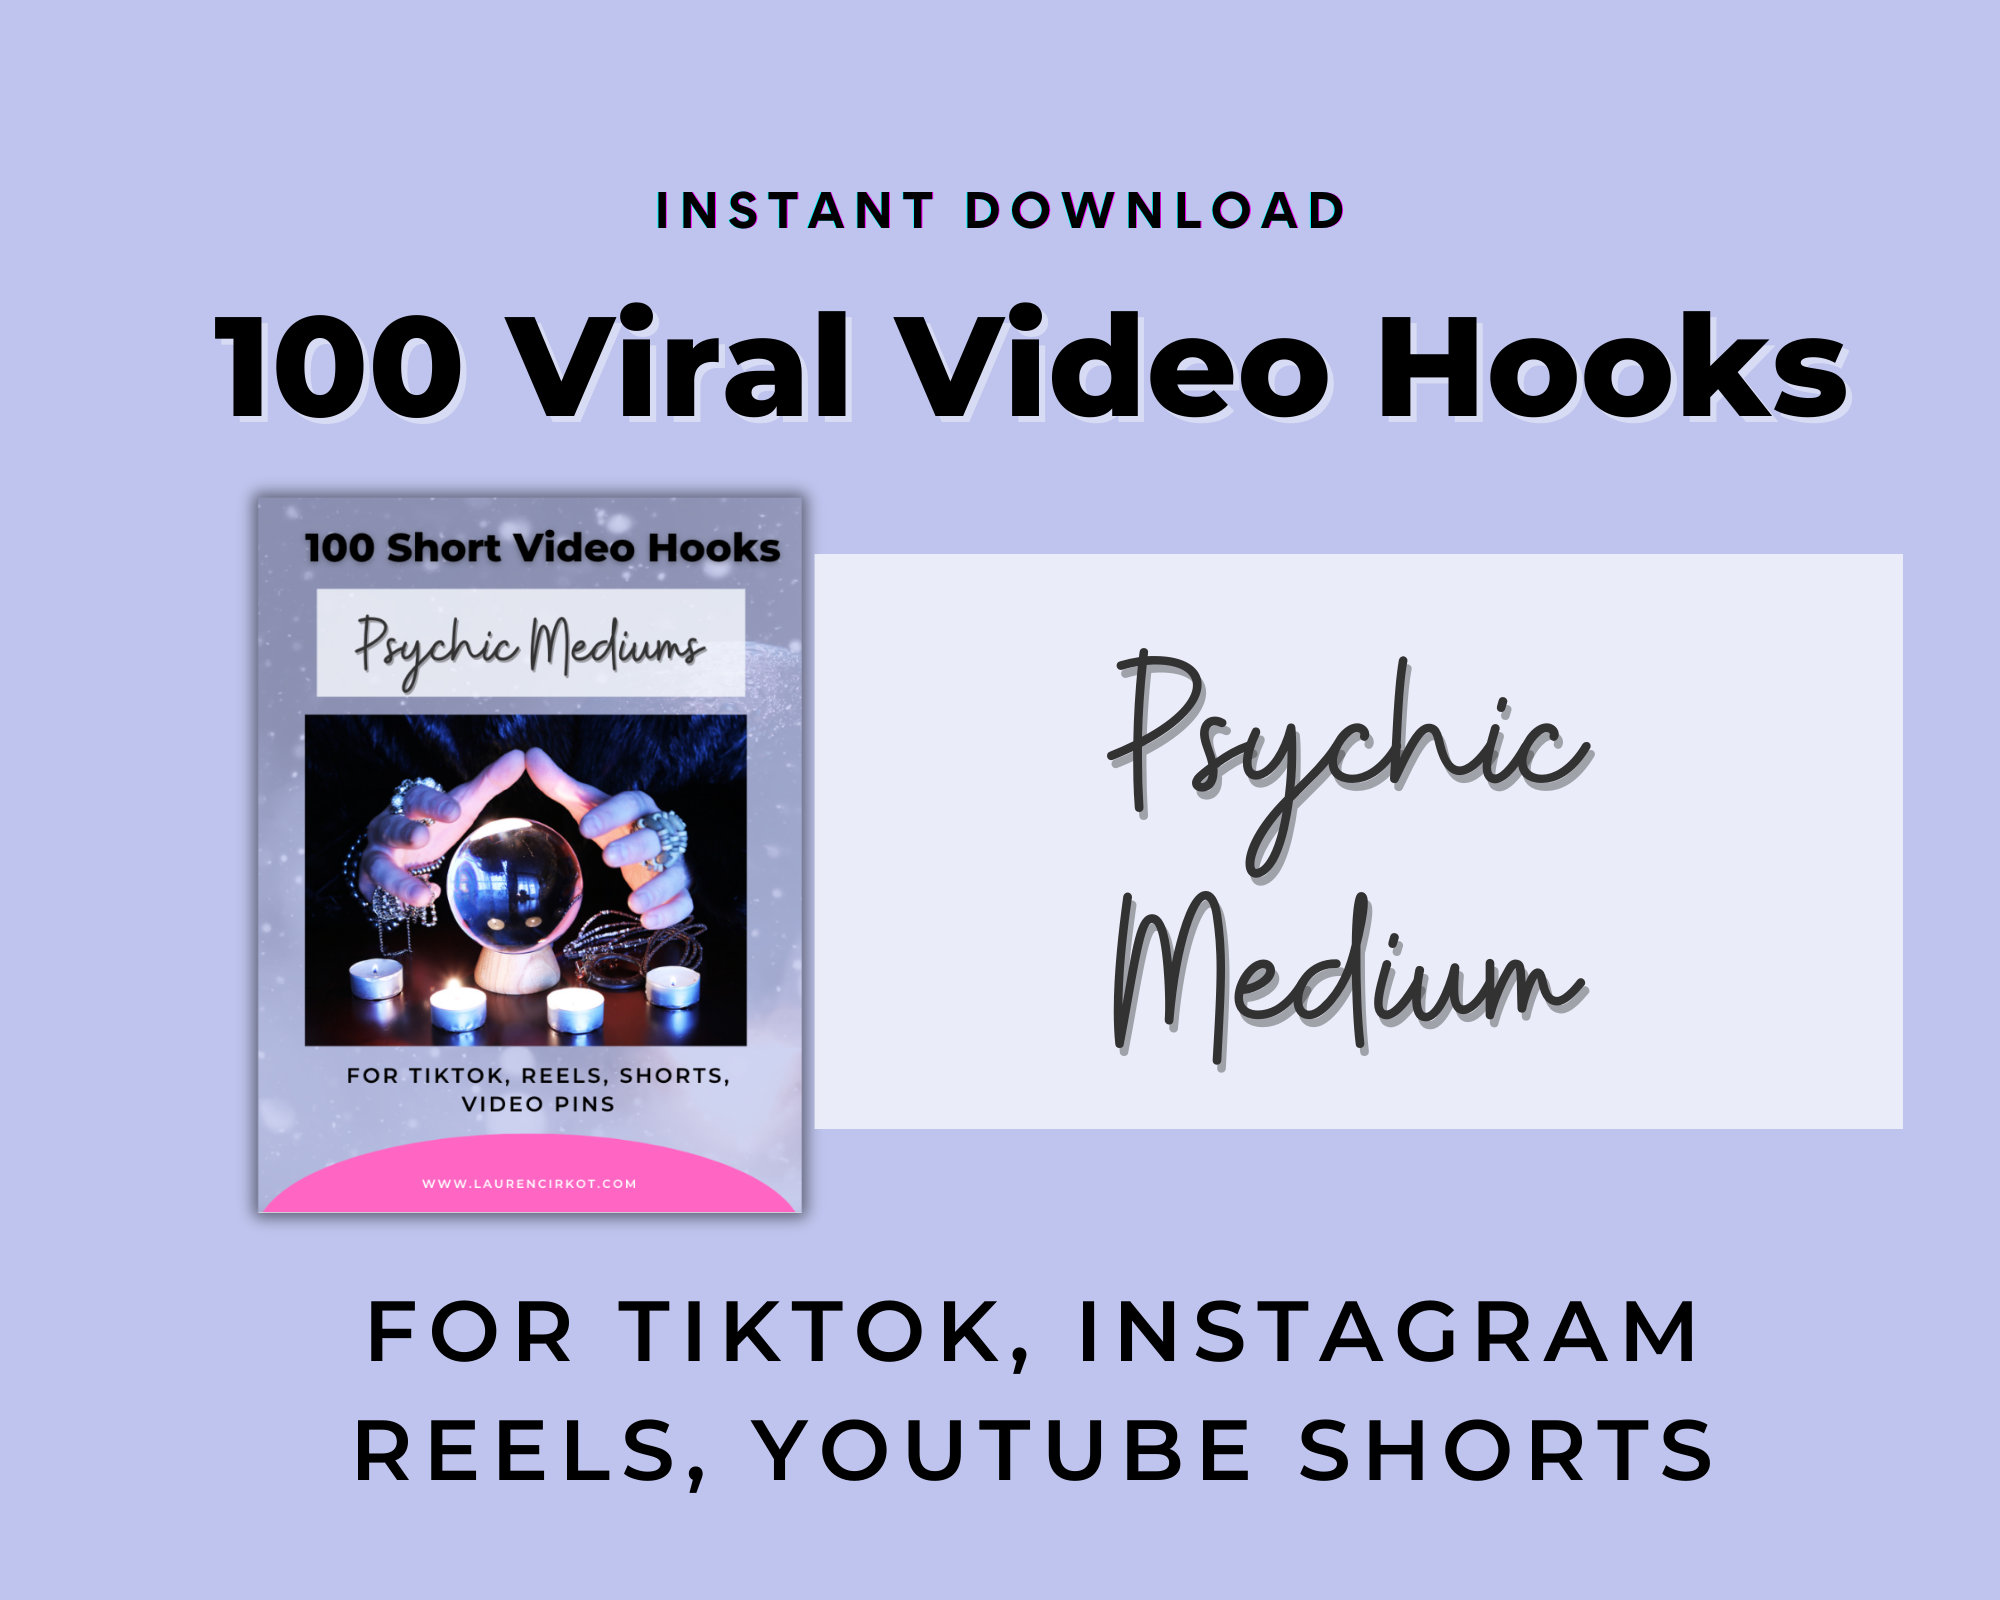 Psychic Medium Video Hooks, Viral Video, Instagram Reels, Content